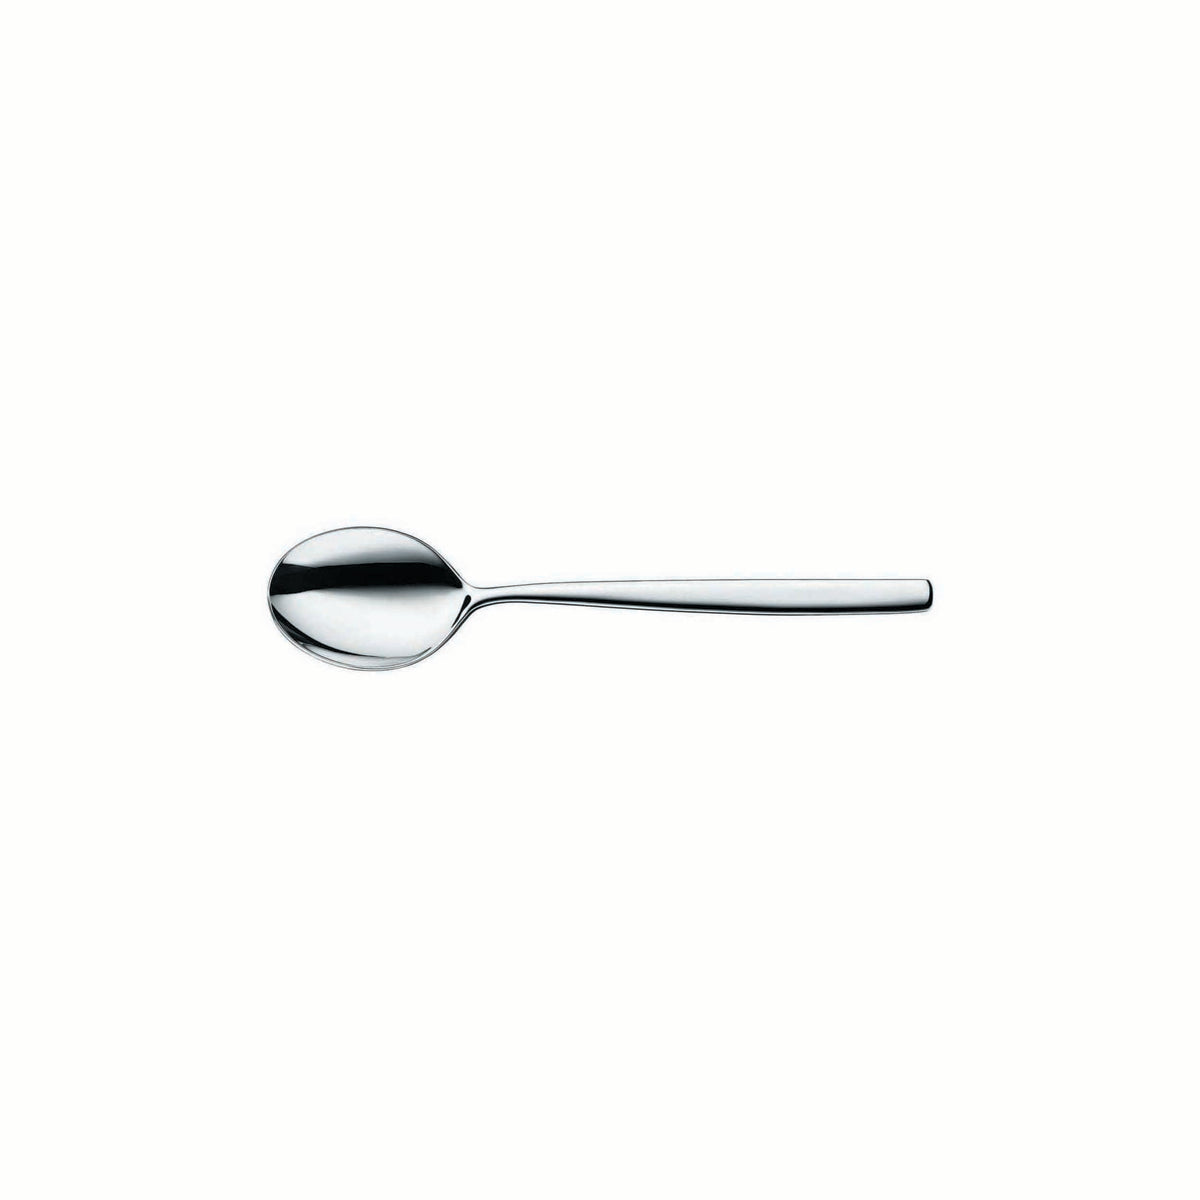 11.0401.6040 WMF Bistro Table Spoon Stainless Steel Tomkin Australia Hospitality Supplies